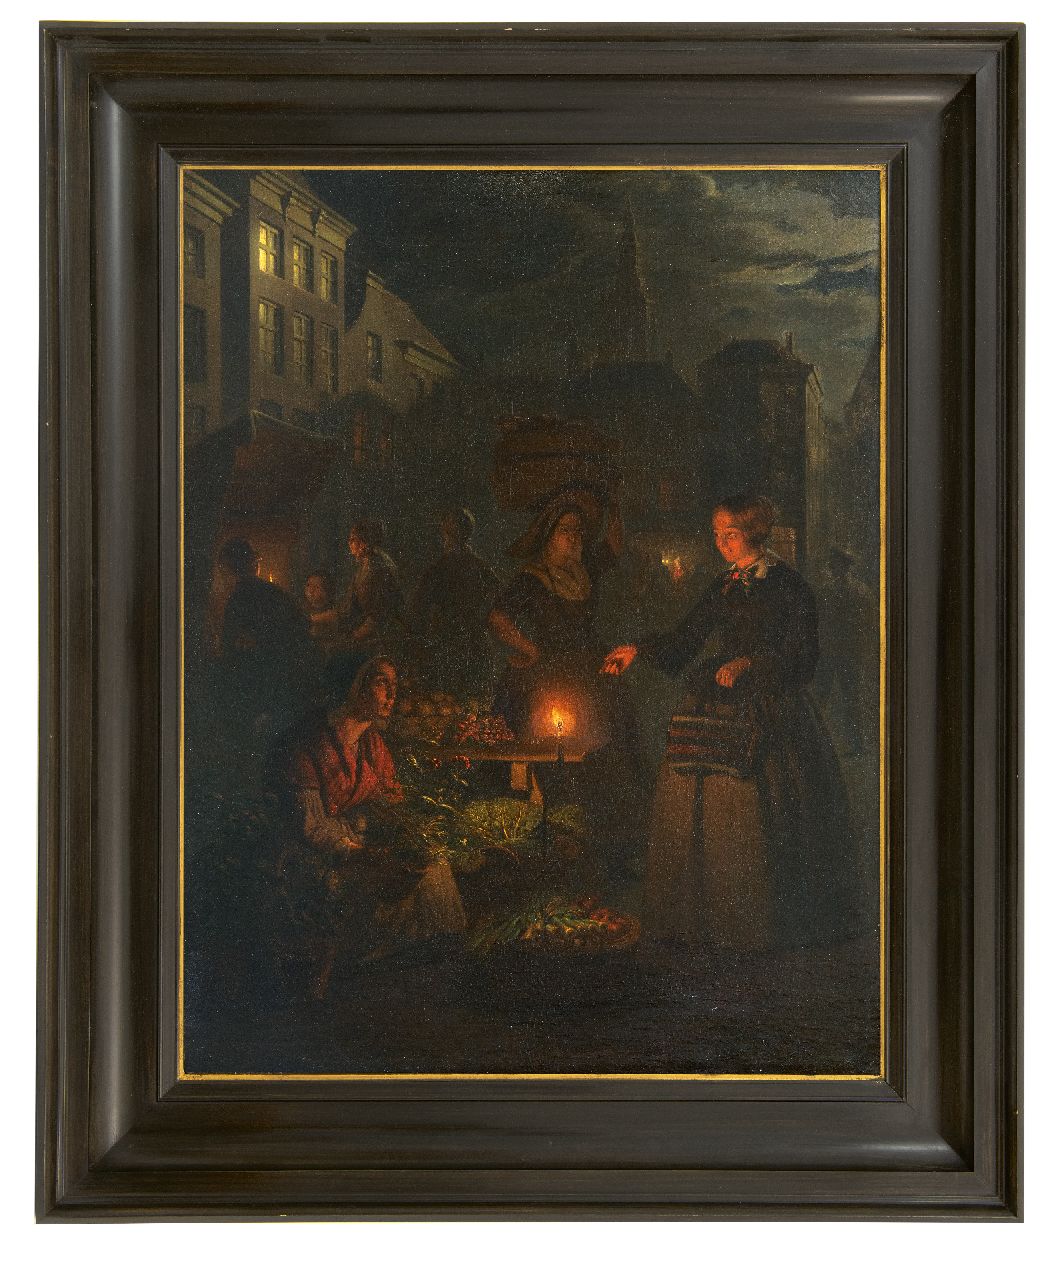 Schendel P. van | Petrus van Schendel | Paintings offered for sale | A moonlit market in The Hague, oil on canvas 66.5 x 51.2 cm, executed 1855-1860